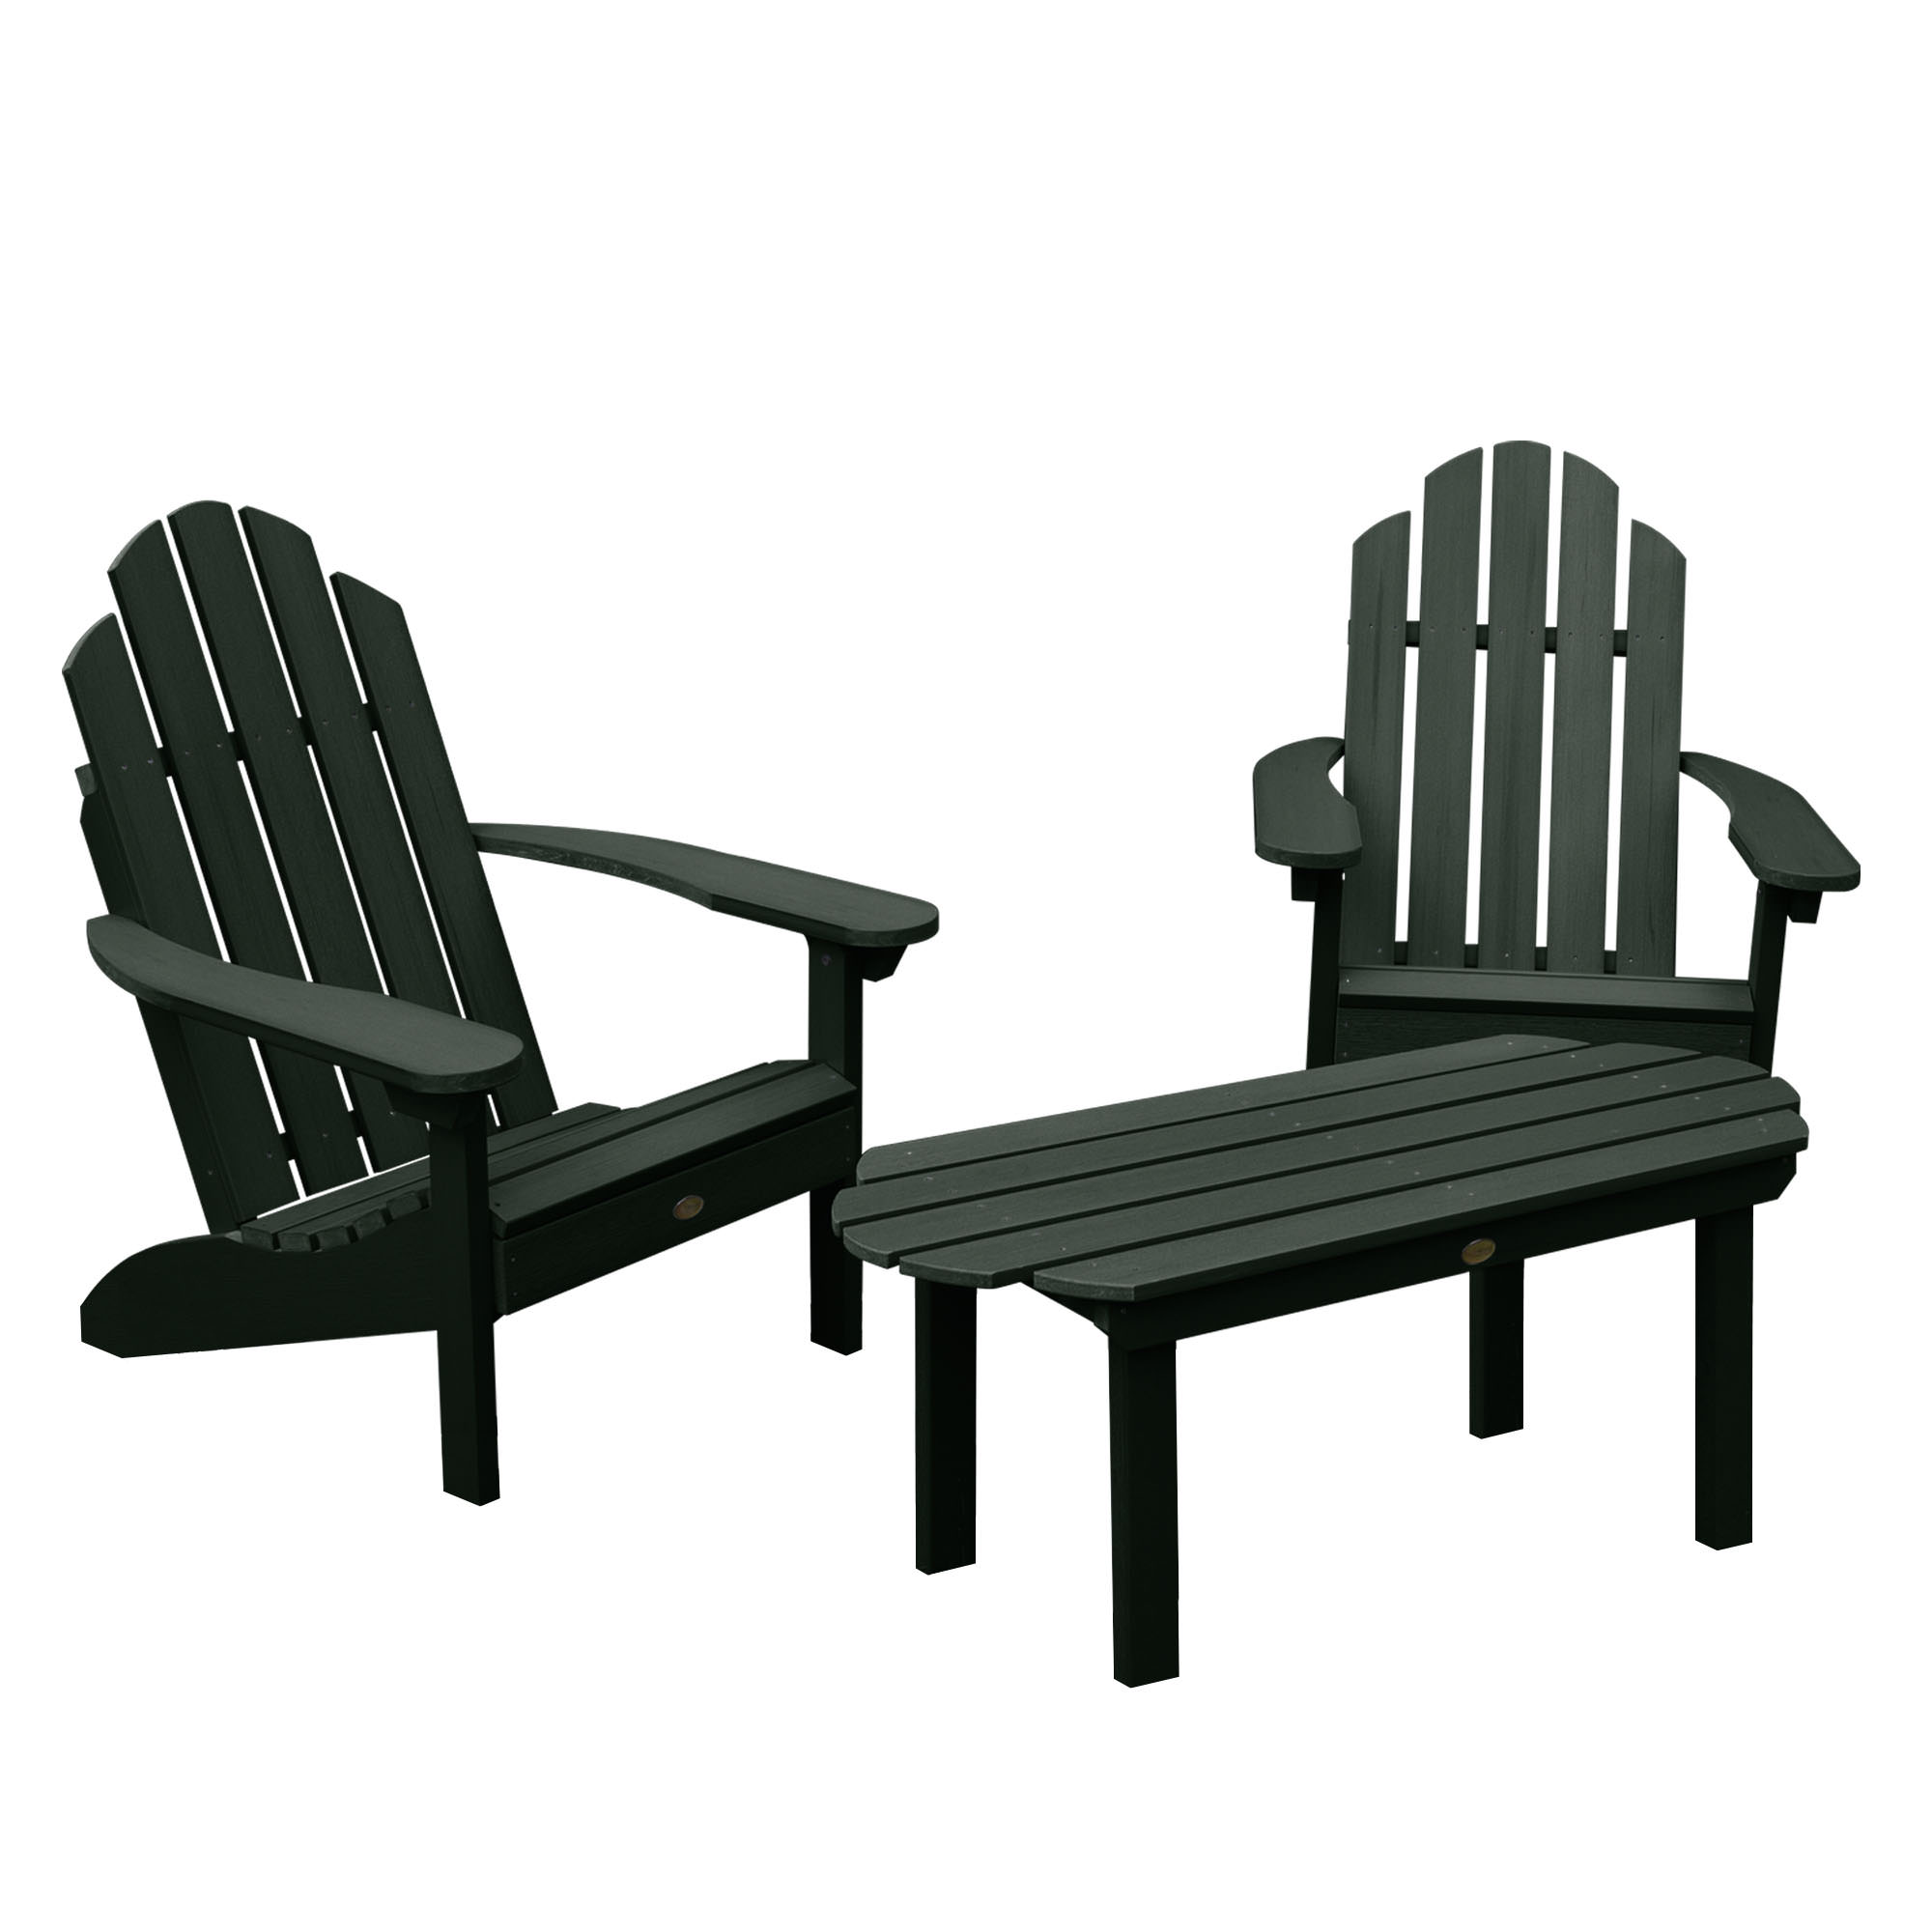 2 Classic Westport Adirondack Chairs, 1 Classic Westport Coffee Table - image 1 of 6